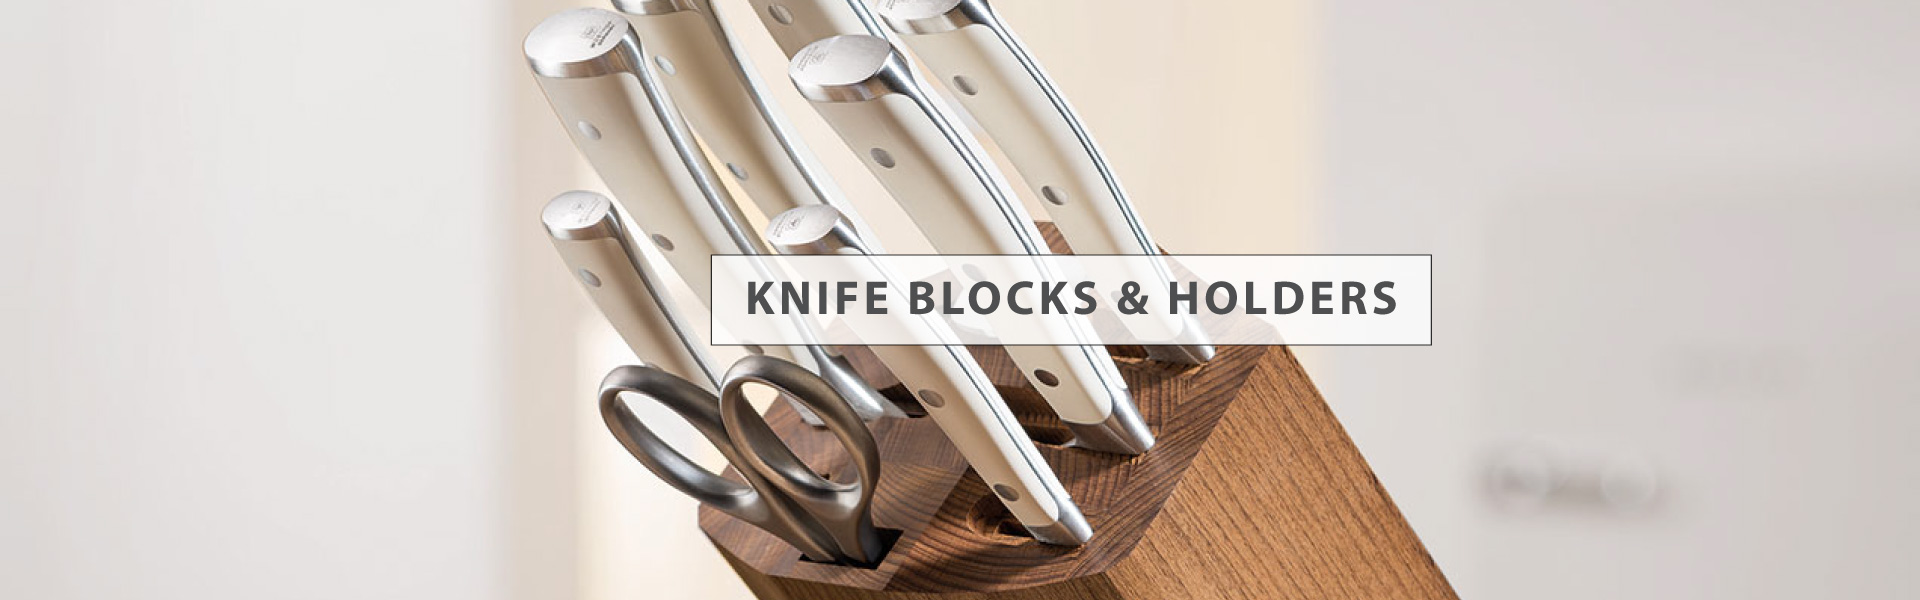 KNIFE BLOCKS & HOLDERS